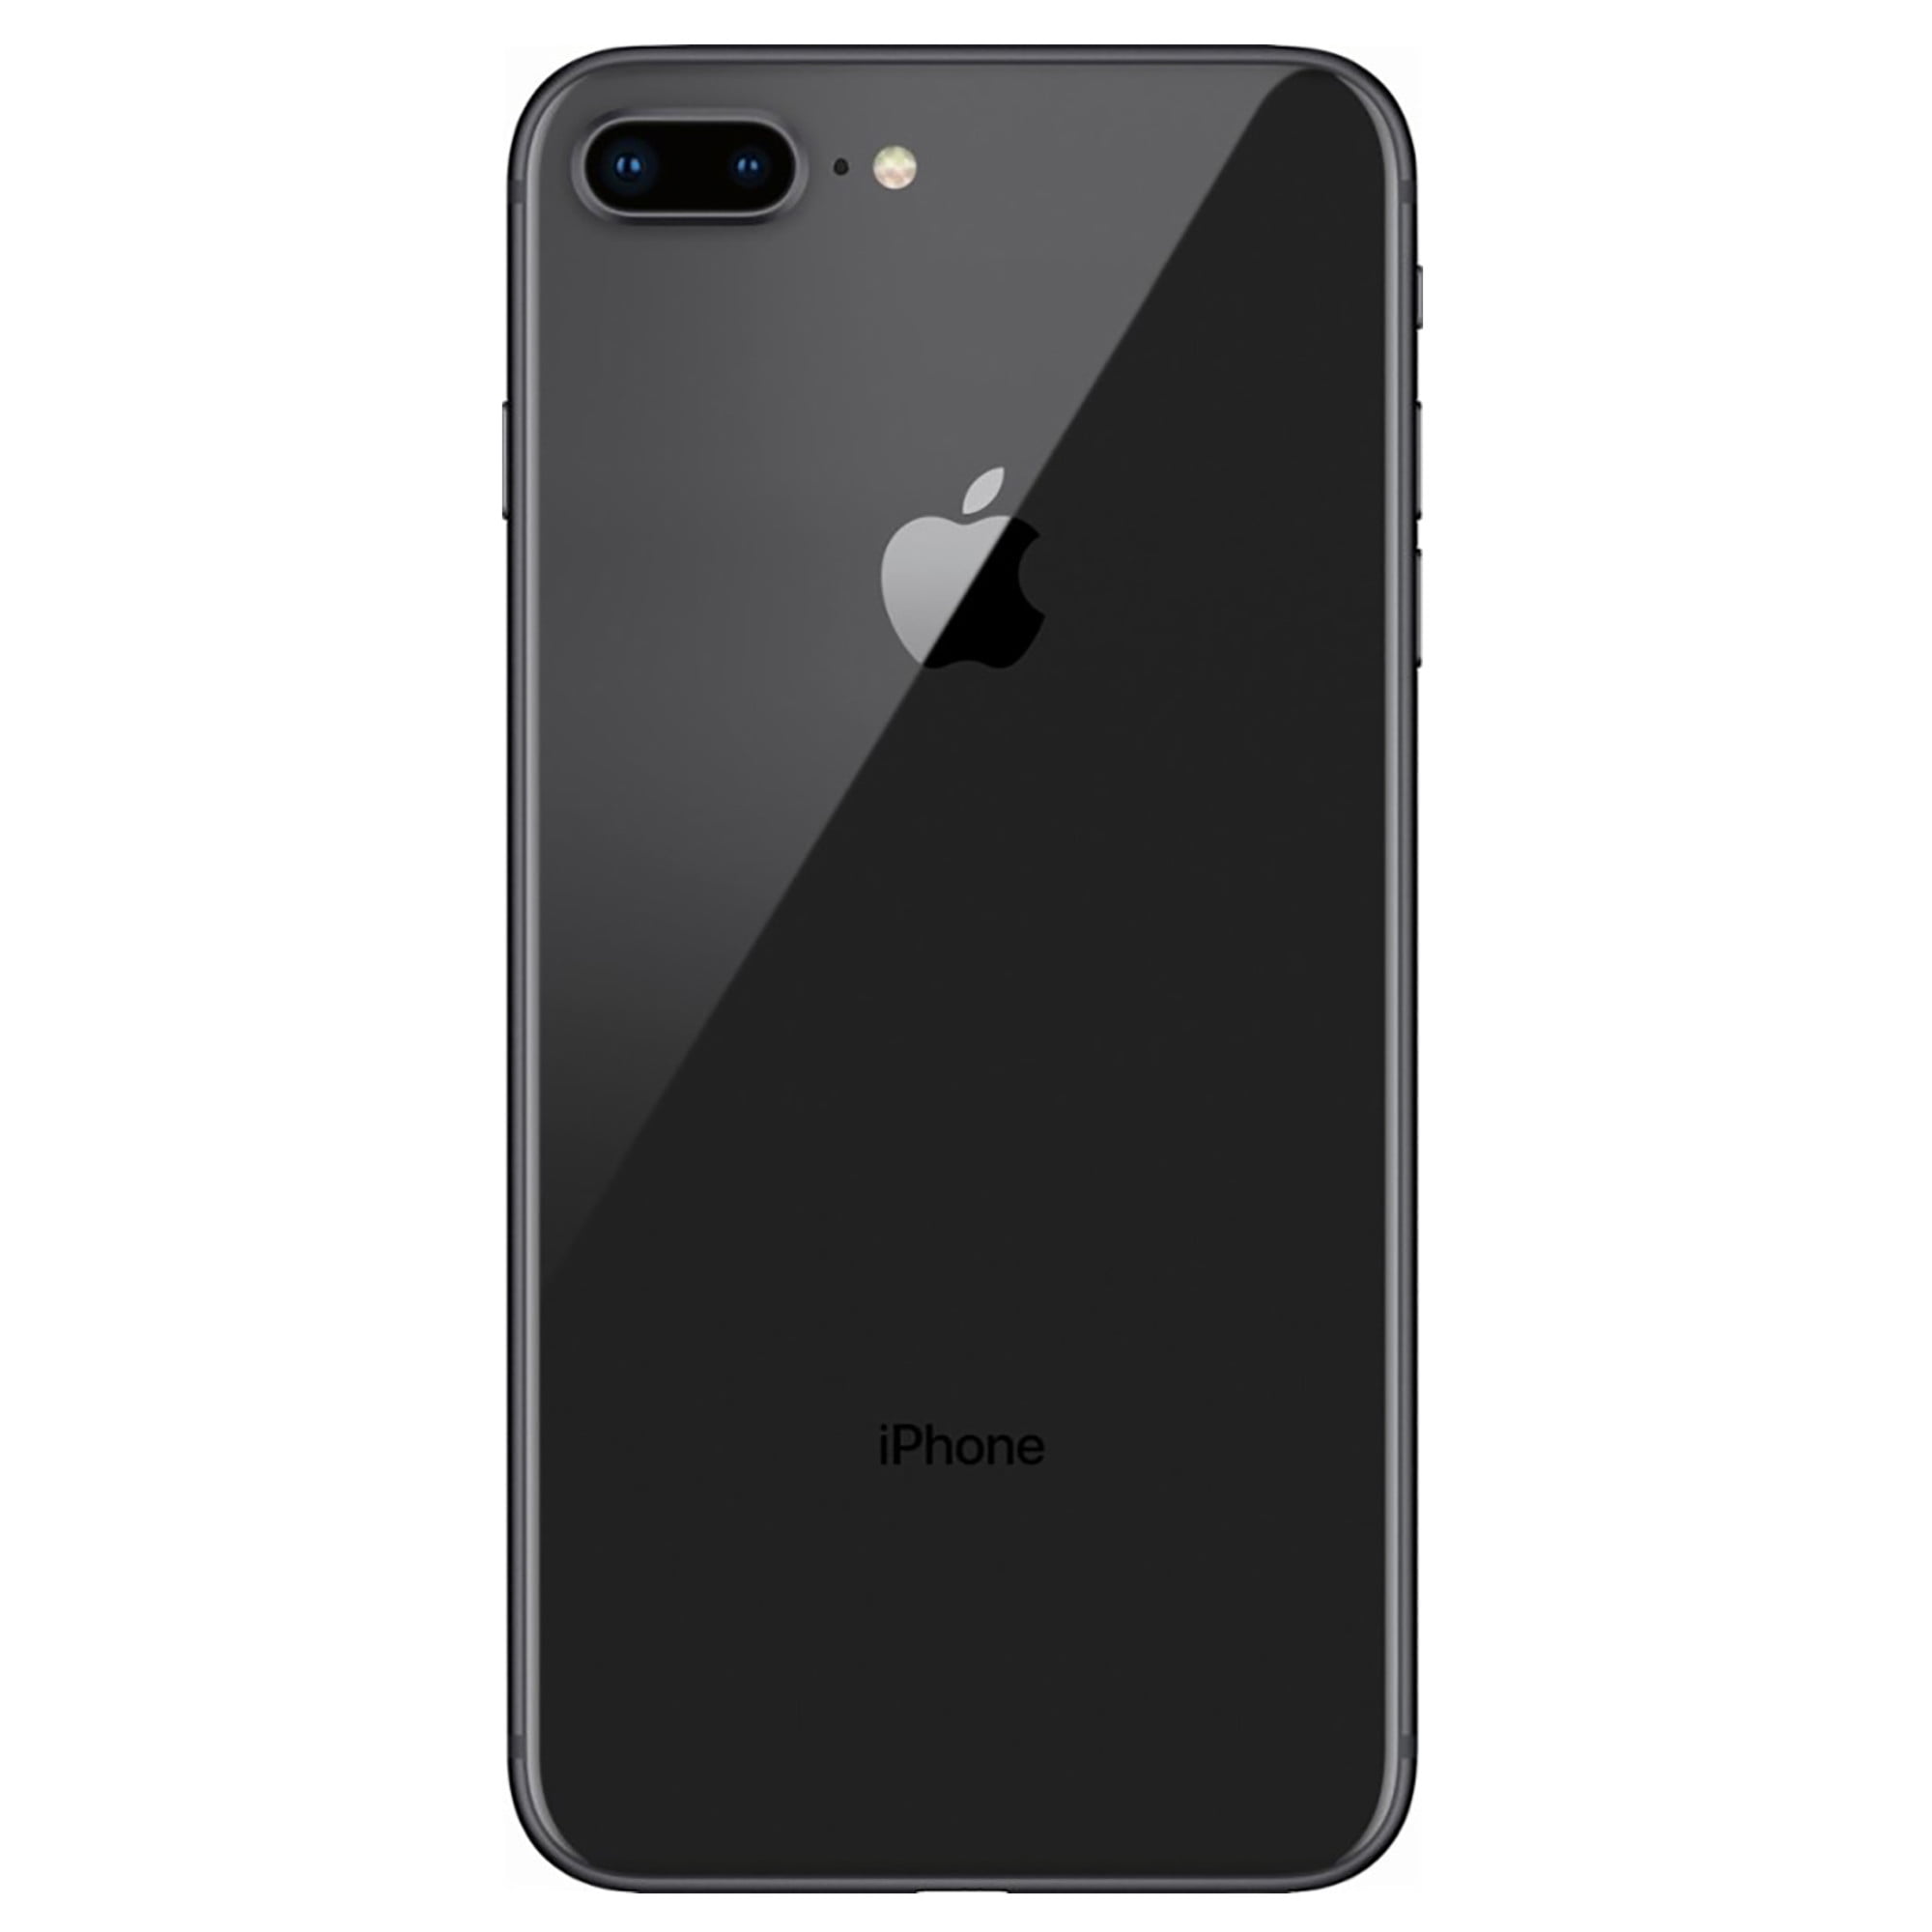 Restored Apple iPhone 8 Plus 256GB Unlocked GSM/CDMA Phone w/ Dual 12MP  Camera - Space Gray (Refurbished)